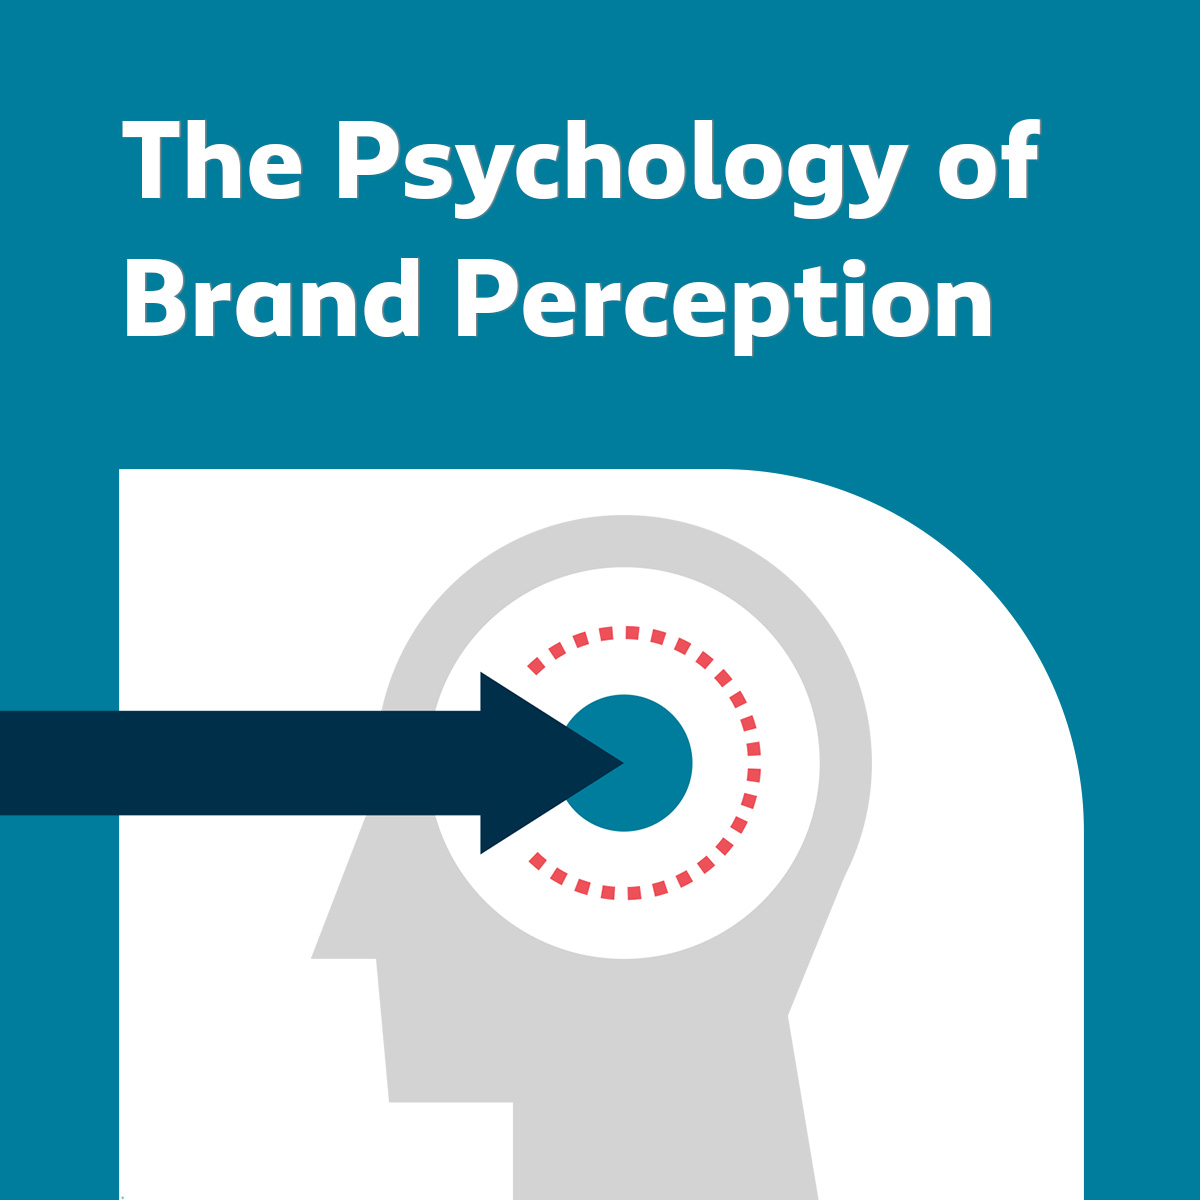 The Psychology of Brand Perception